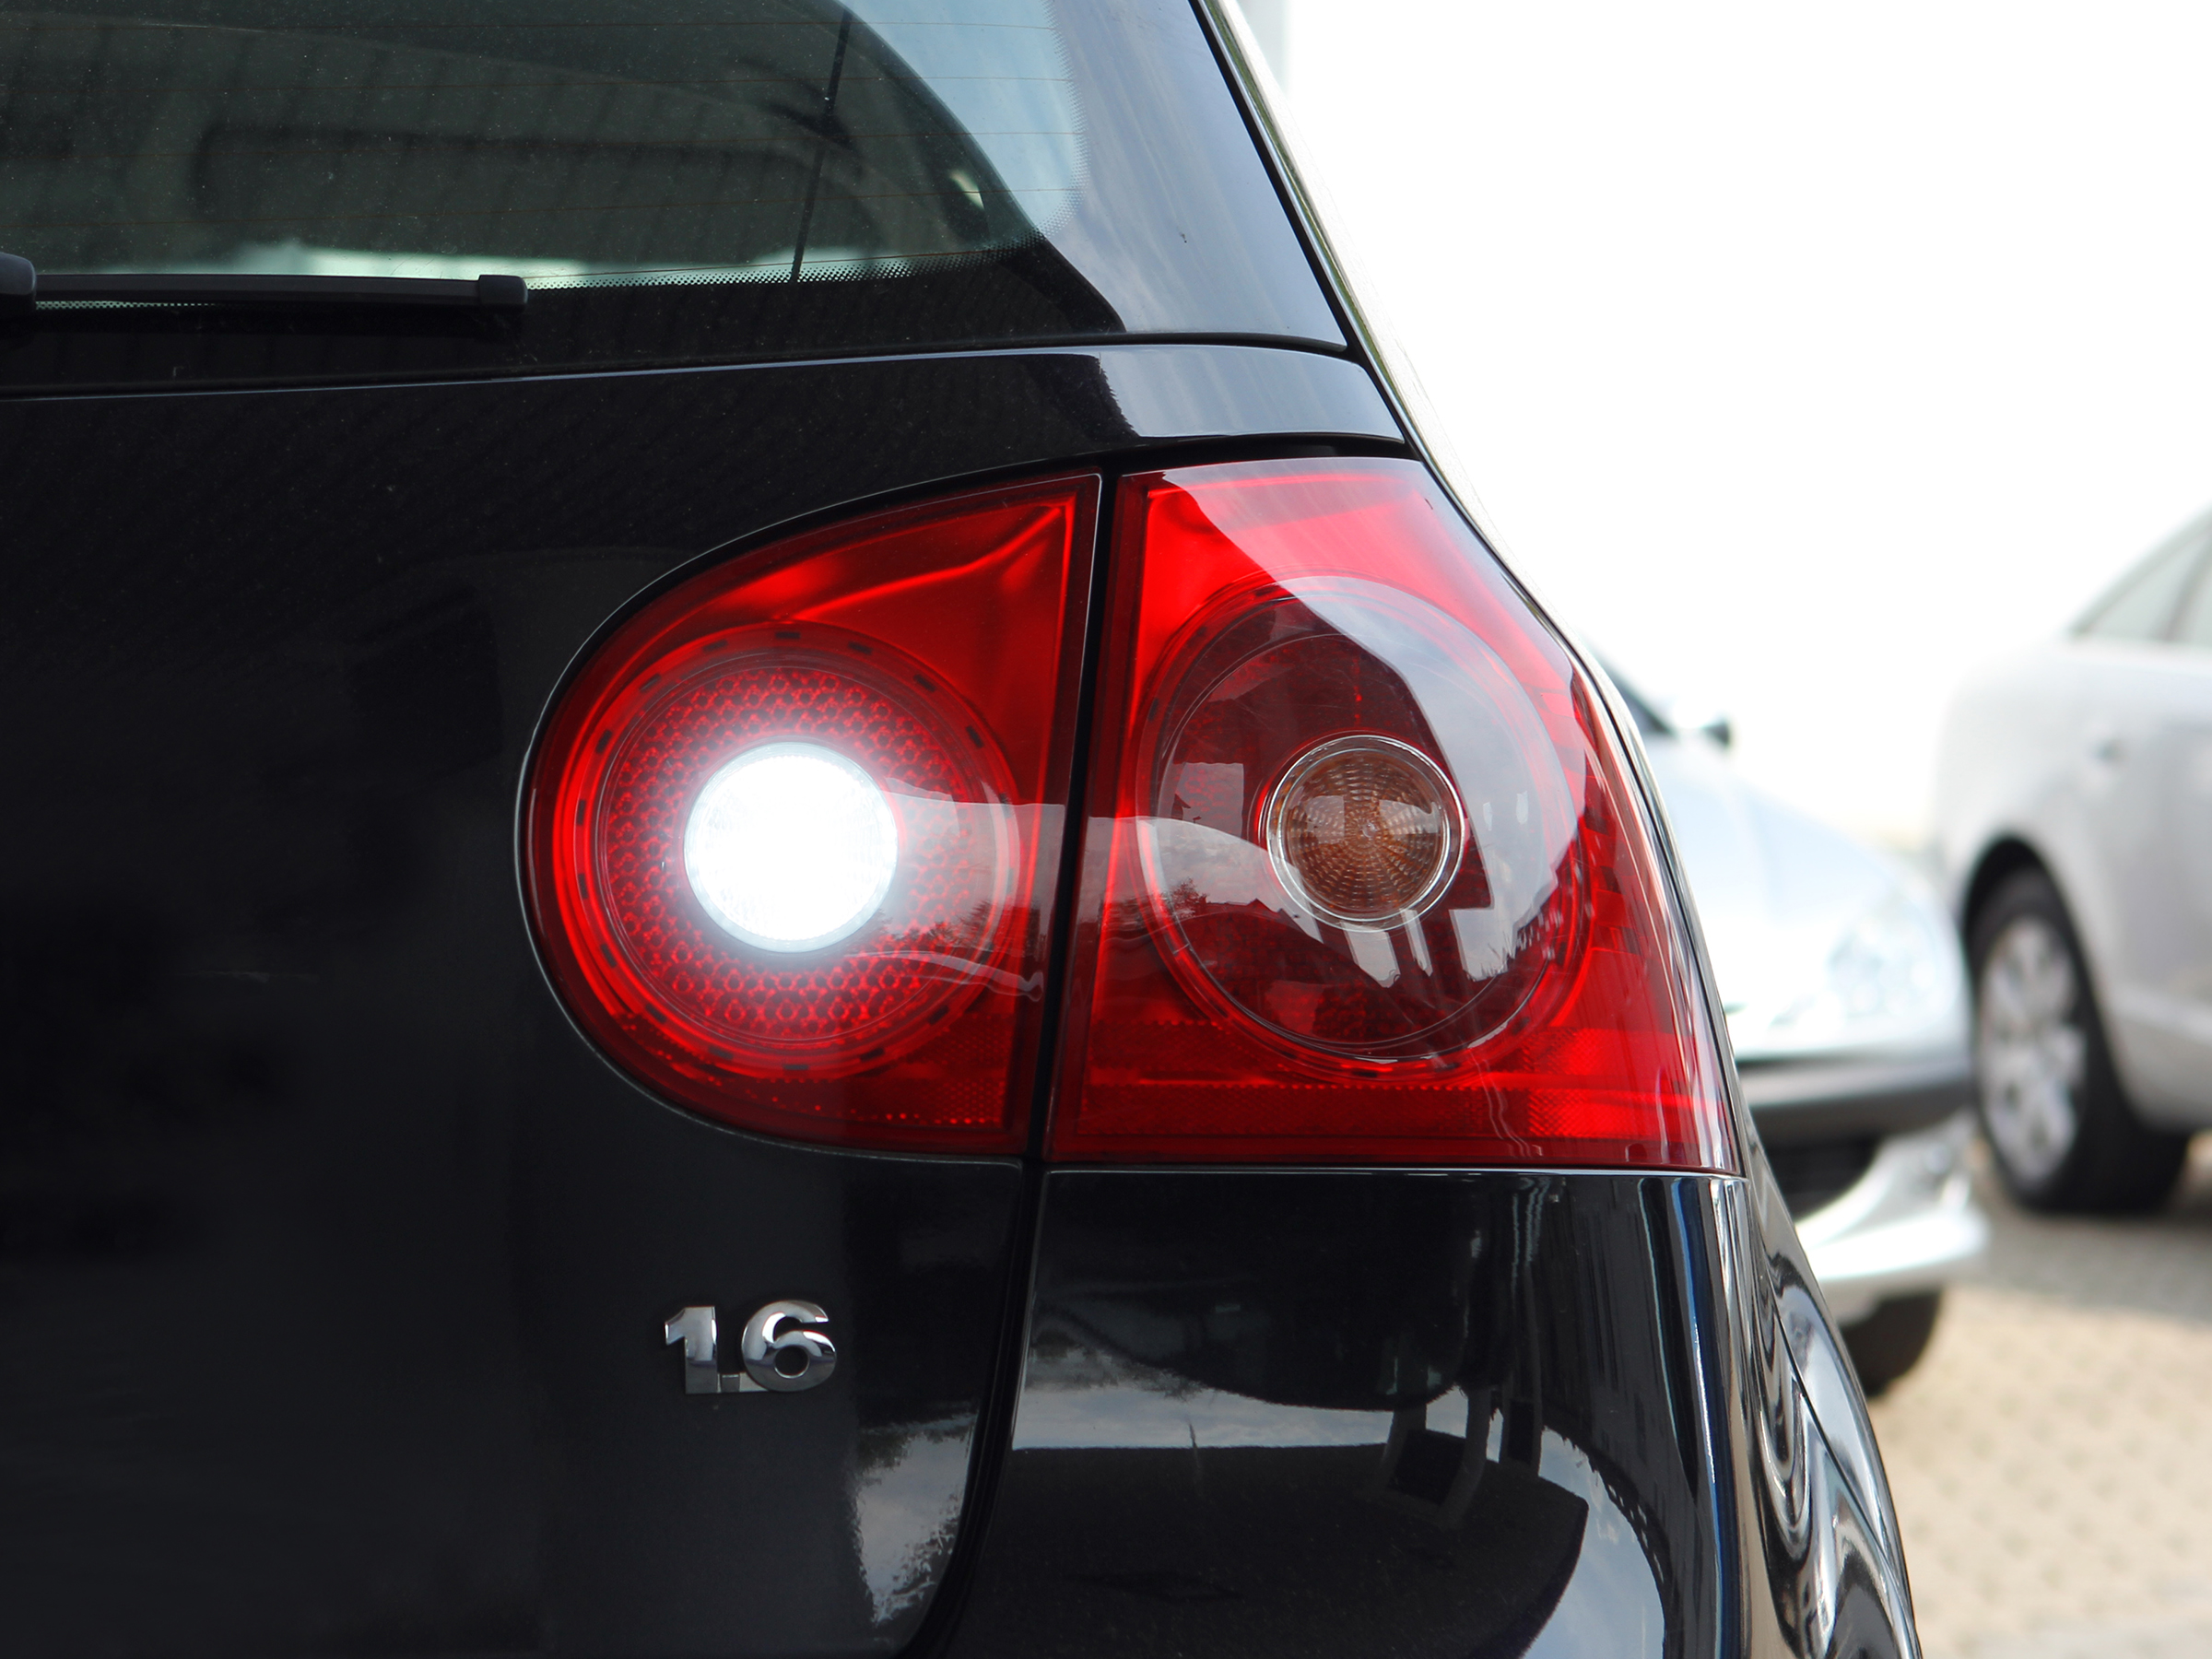 6x5 W CREE® LED Rückfahrlicht VW Golf 5, weiss, LED Rückfahrlicht  Volkswagen, LED Rückfahrlicht